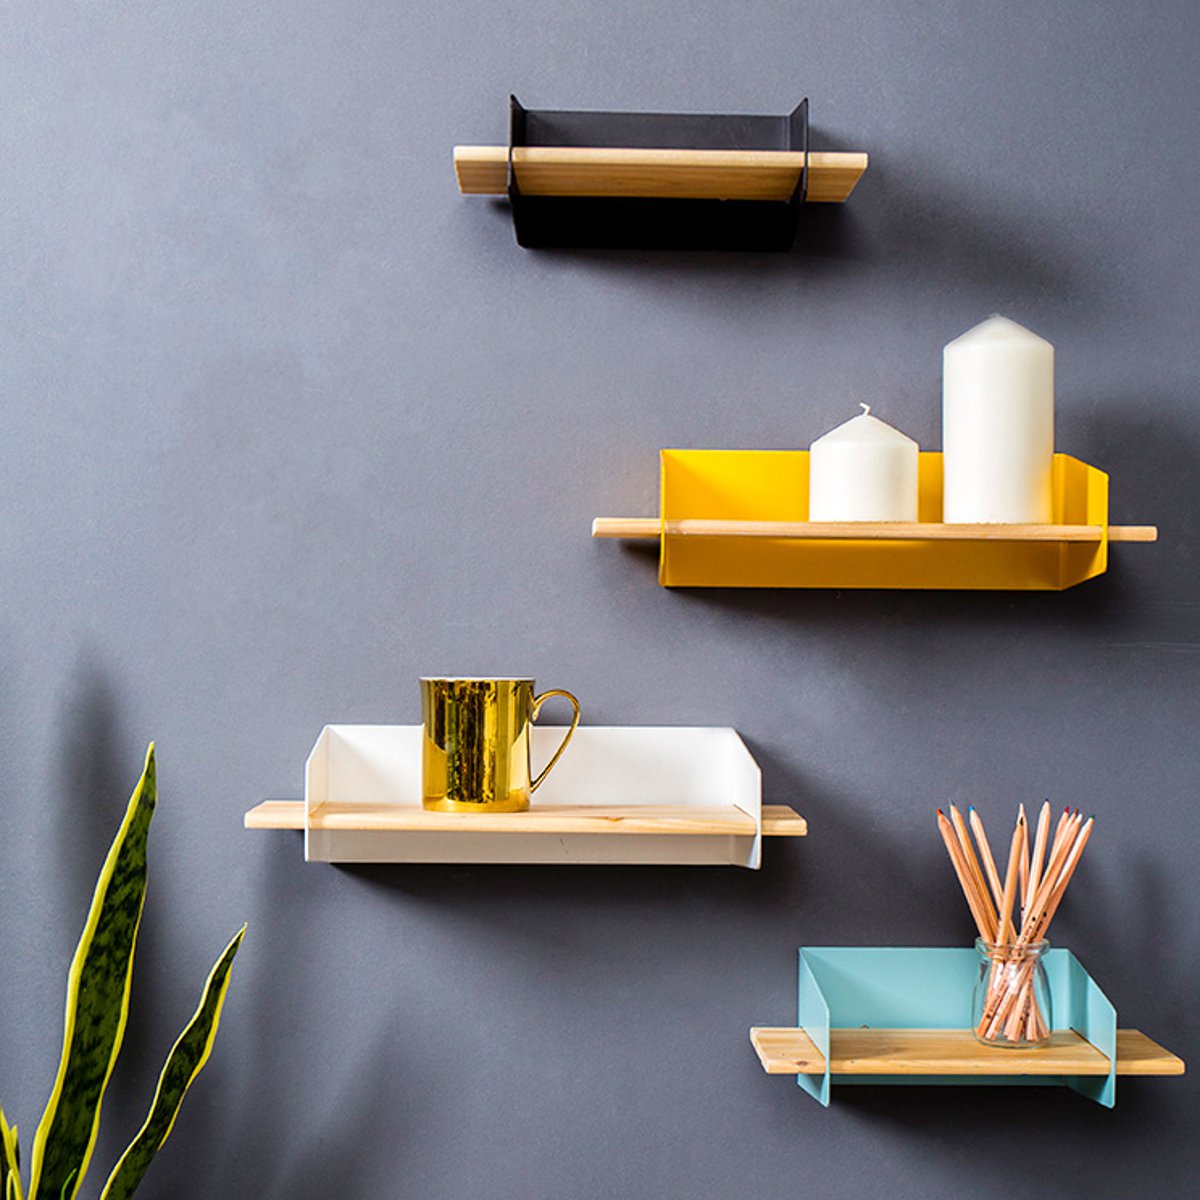 5-Color-20CM-Floating-Wall-Mounted-Shelf-Hanging-Holder-Storage-Iron-Wood-Display-Bookshelf-Bracket-1384376-4